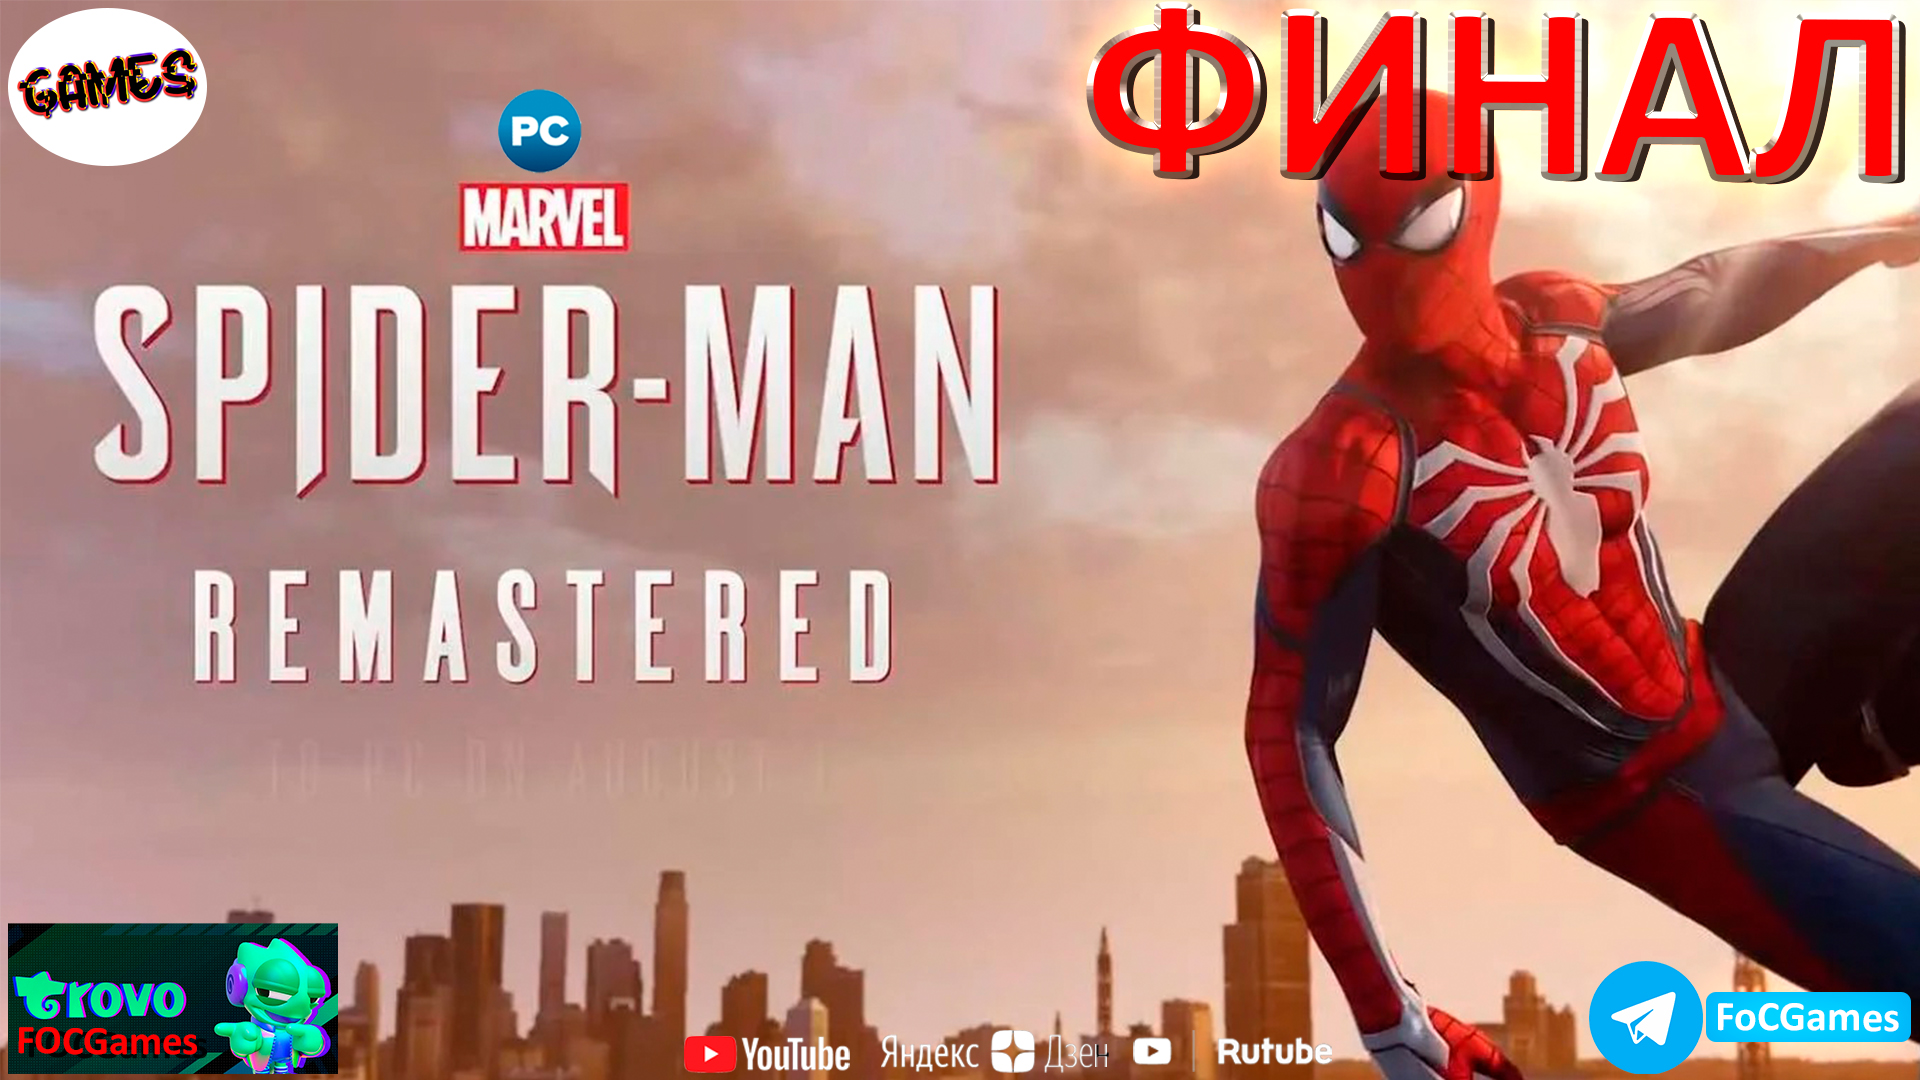 Marvel’s Spider-Man Remastered ➤ ФИНАЛ ➤ СТРИМ ➤Человек-Паук 2022➤ ПК ➤Геймплей➤FoC Games.mp4